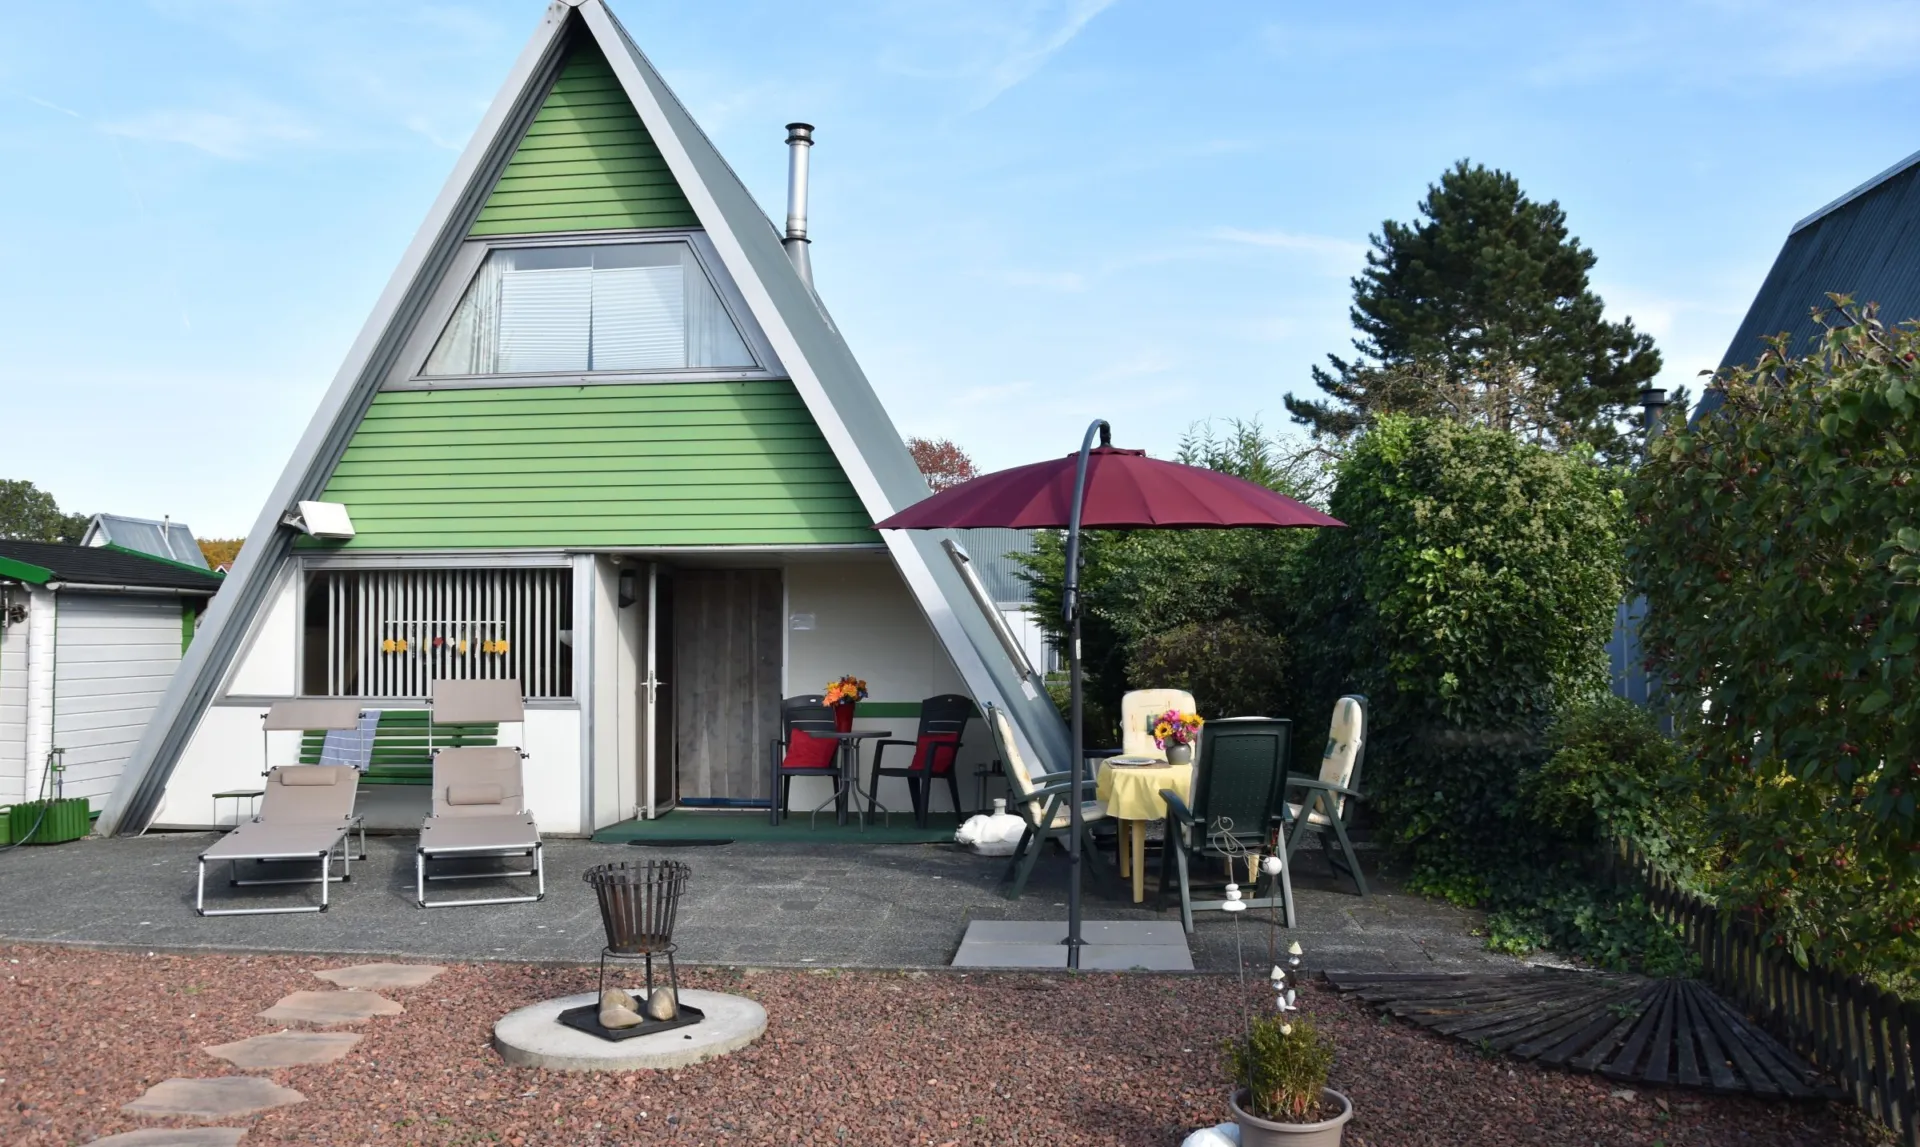 Naturisten huisje Nederland bungalow 43 1